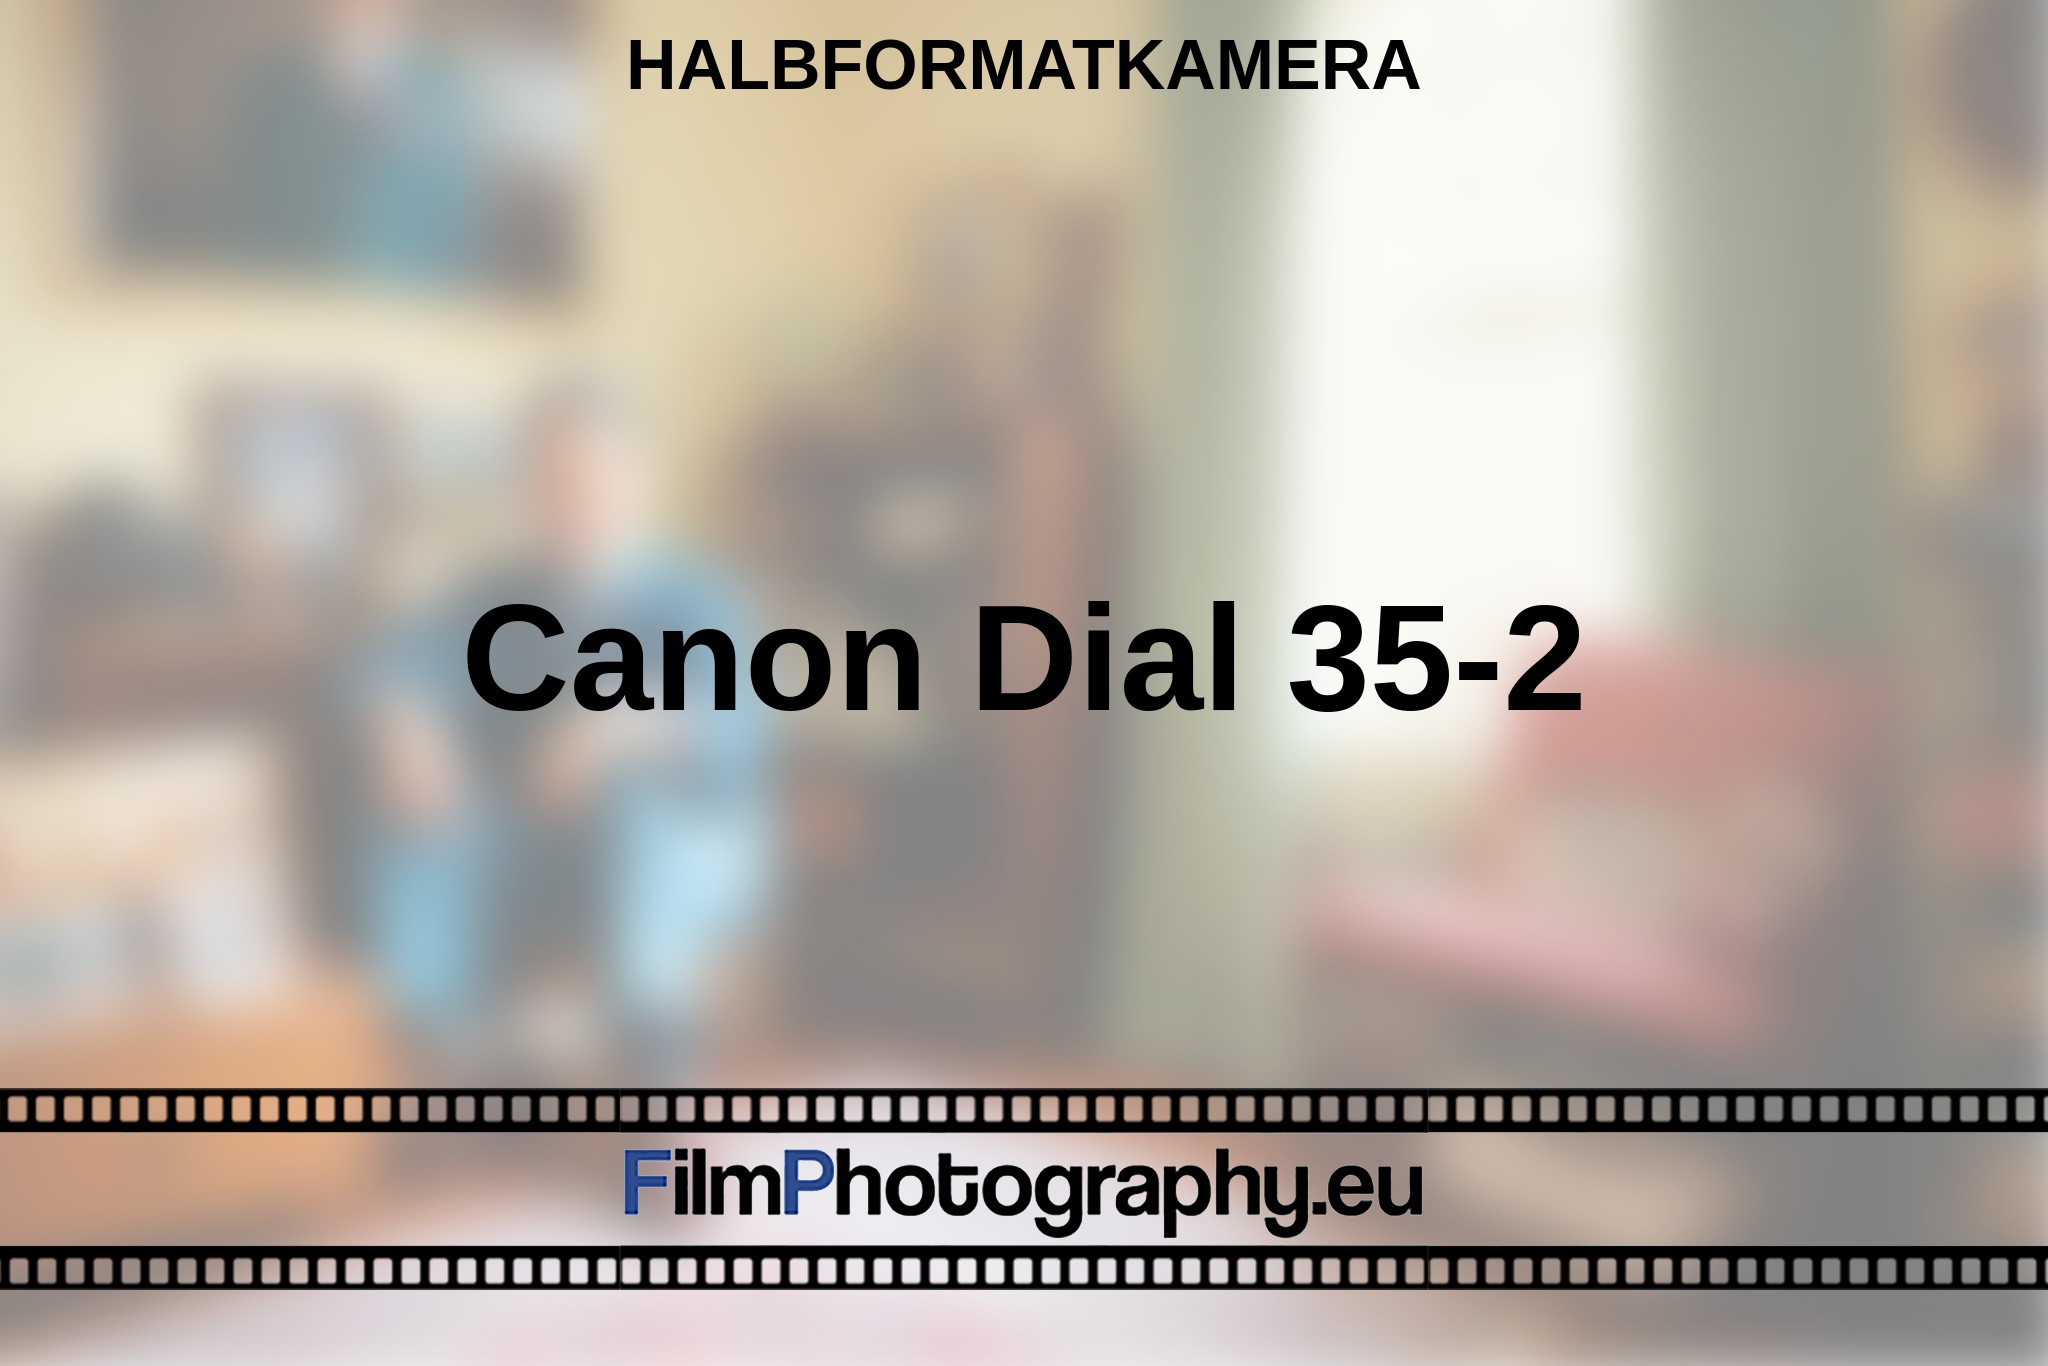 canon-dial-35-2-halbformatkamera-bnv.jpg